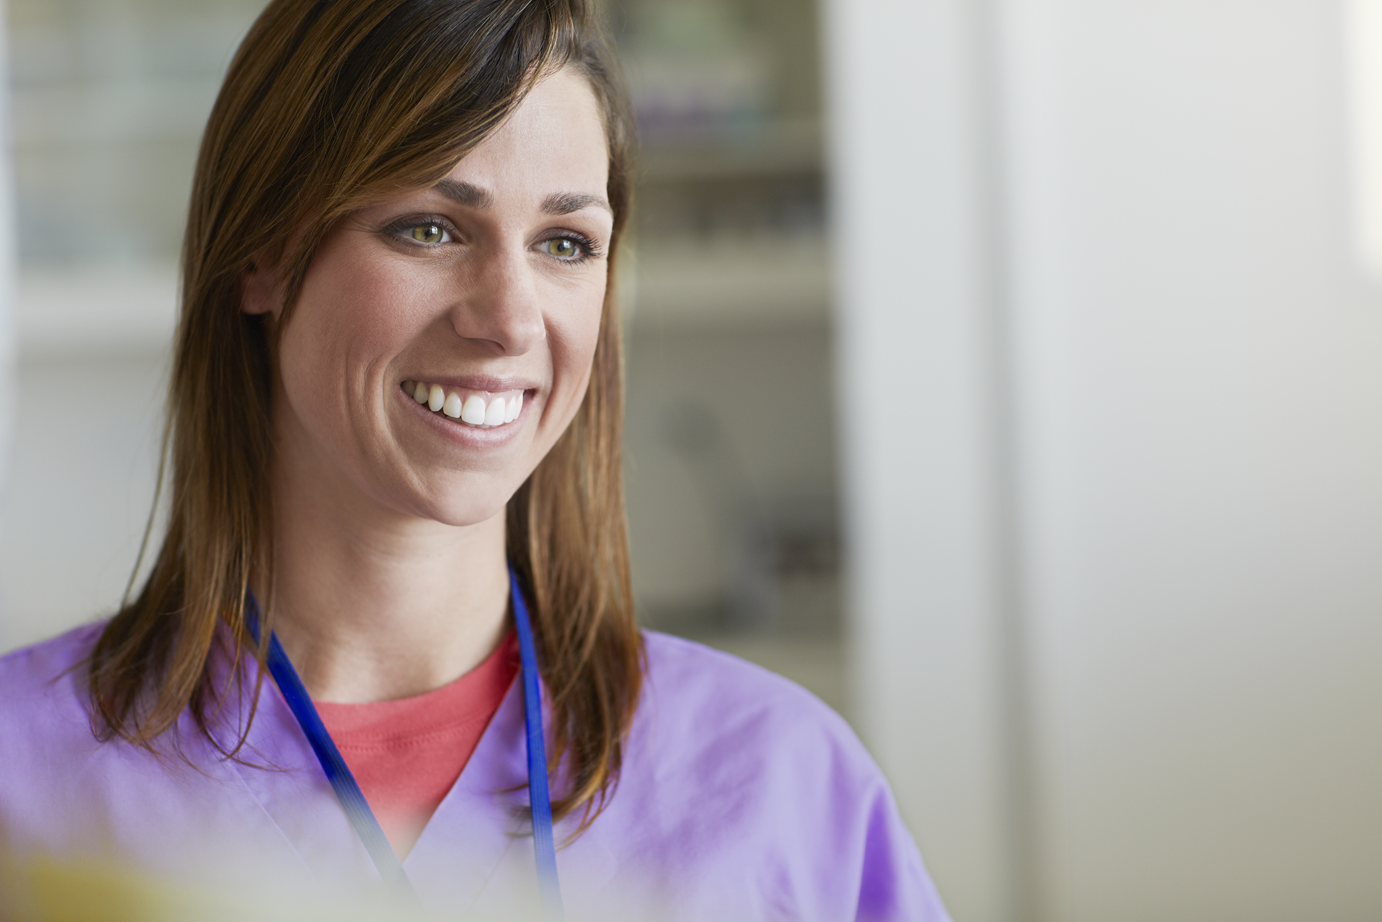 A nurse smiling in a hospital